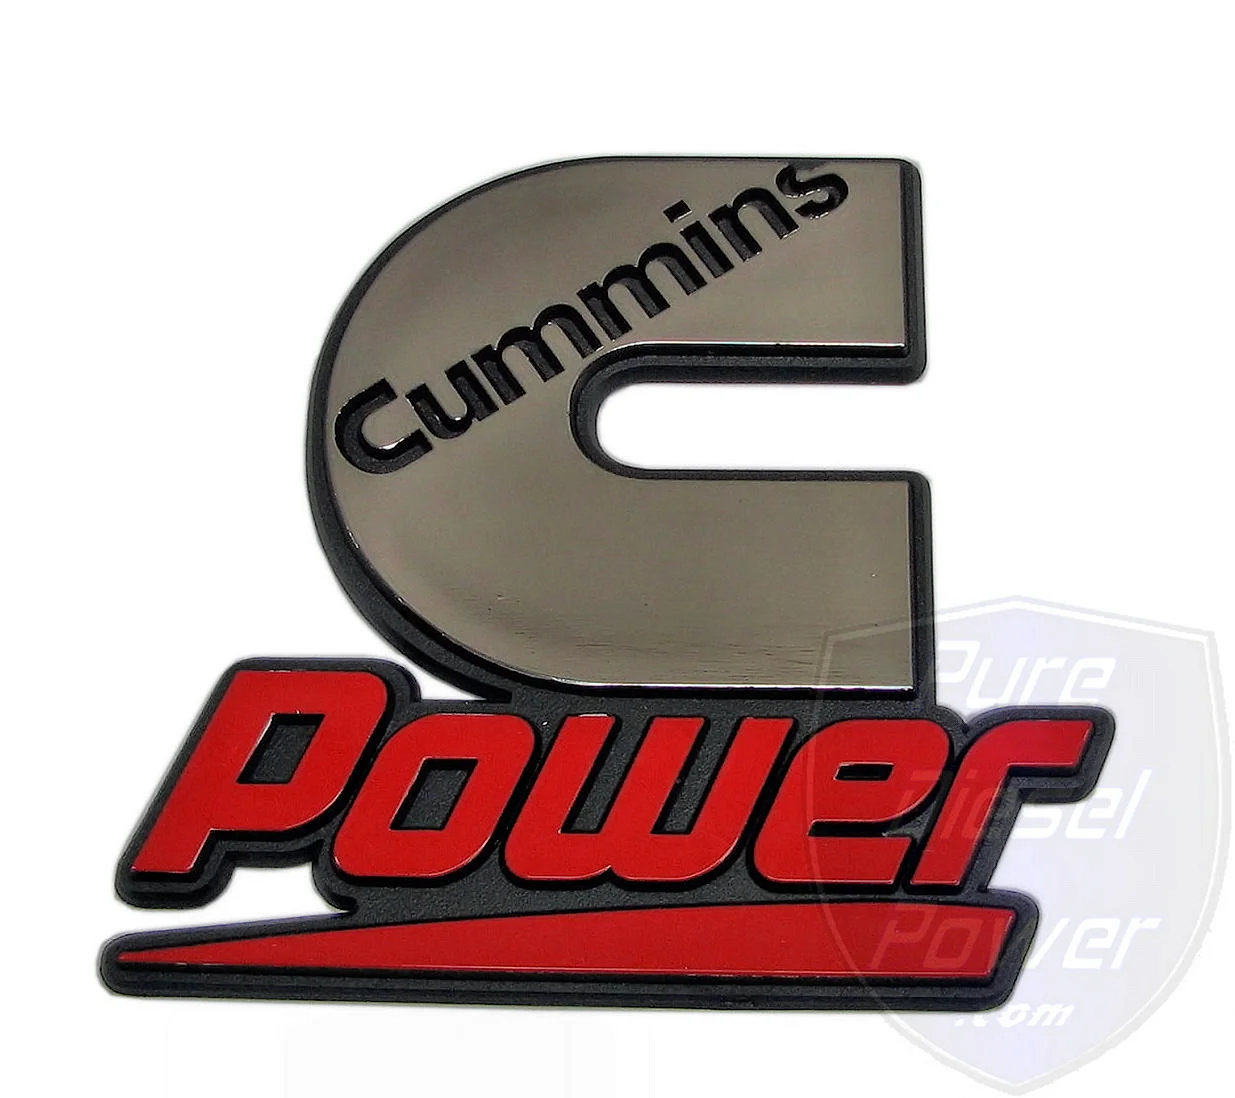 Cummins Turbo Diesel Logo Wallpaper